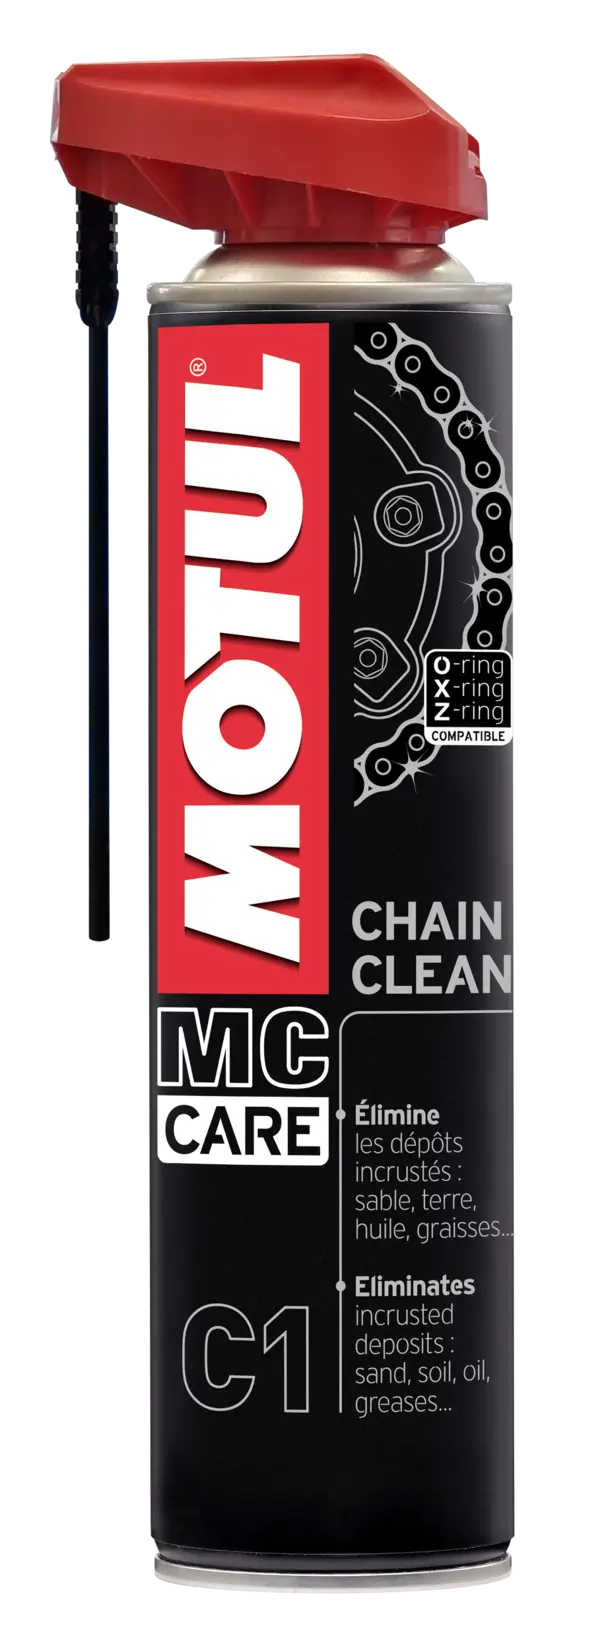 Chain Clean Motul MC Care C1 Nettoyant Chaîne Moto